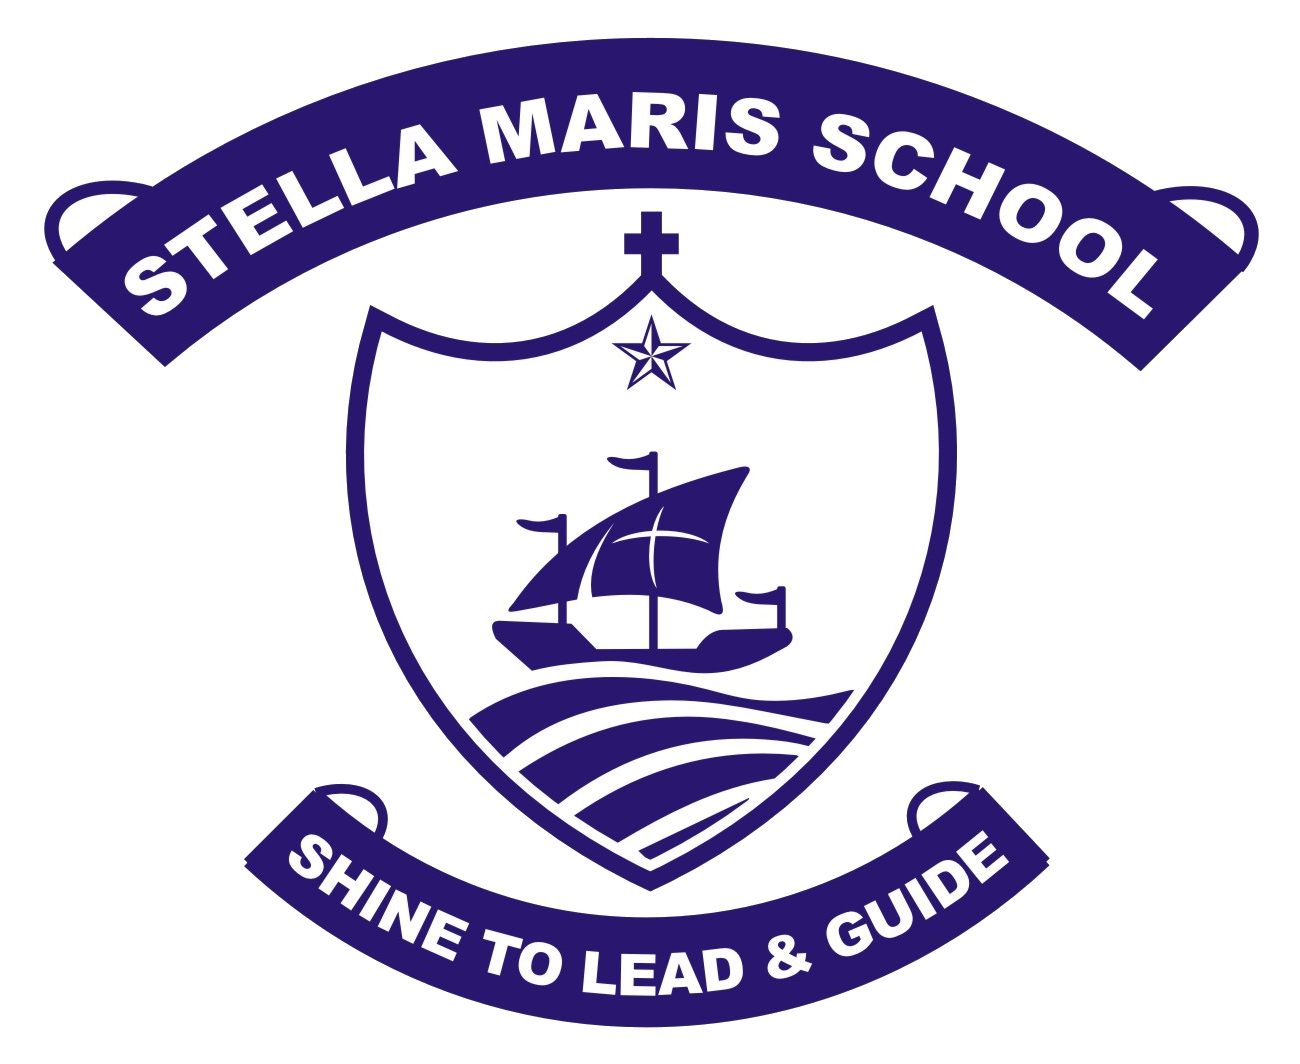 Download Form | Stella Maris School, Pune | Stella Maris School, Pune